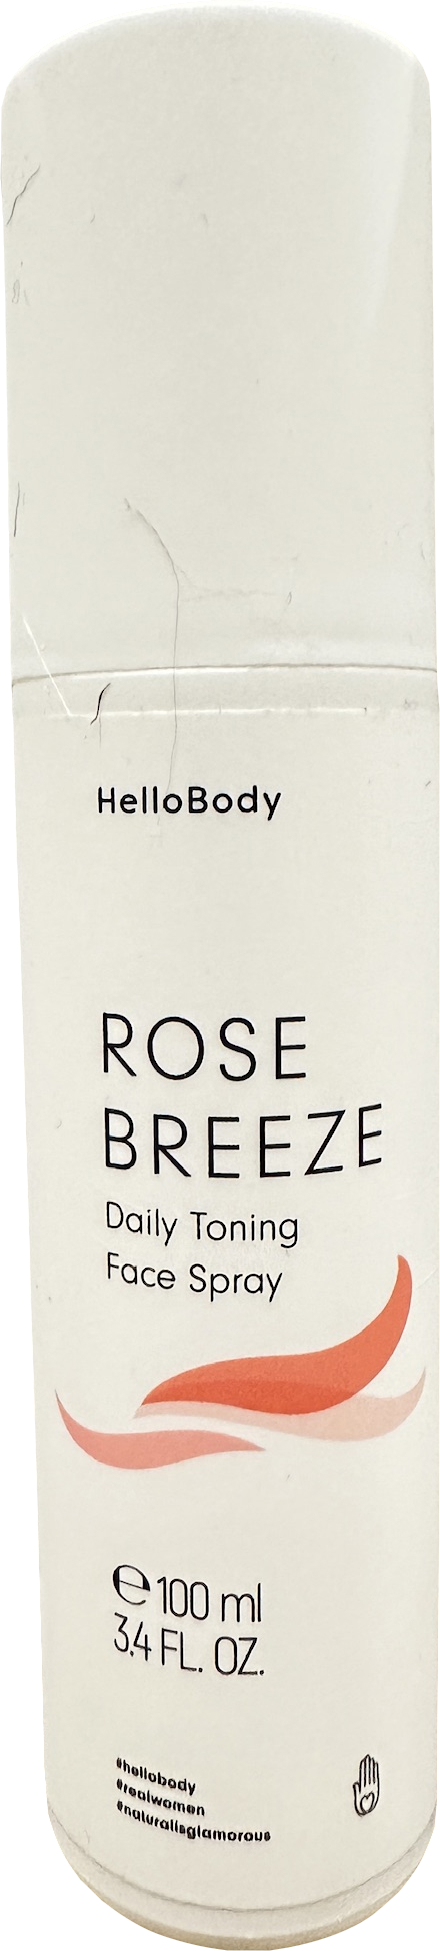 hellobody Rose Breeze Daily Toning Face Spray 100ml